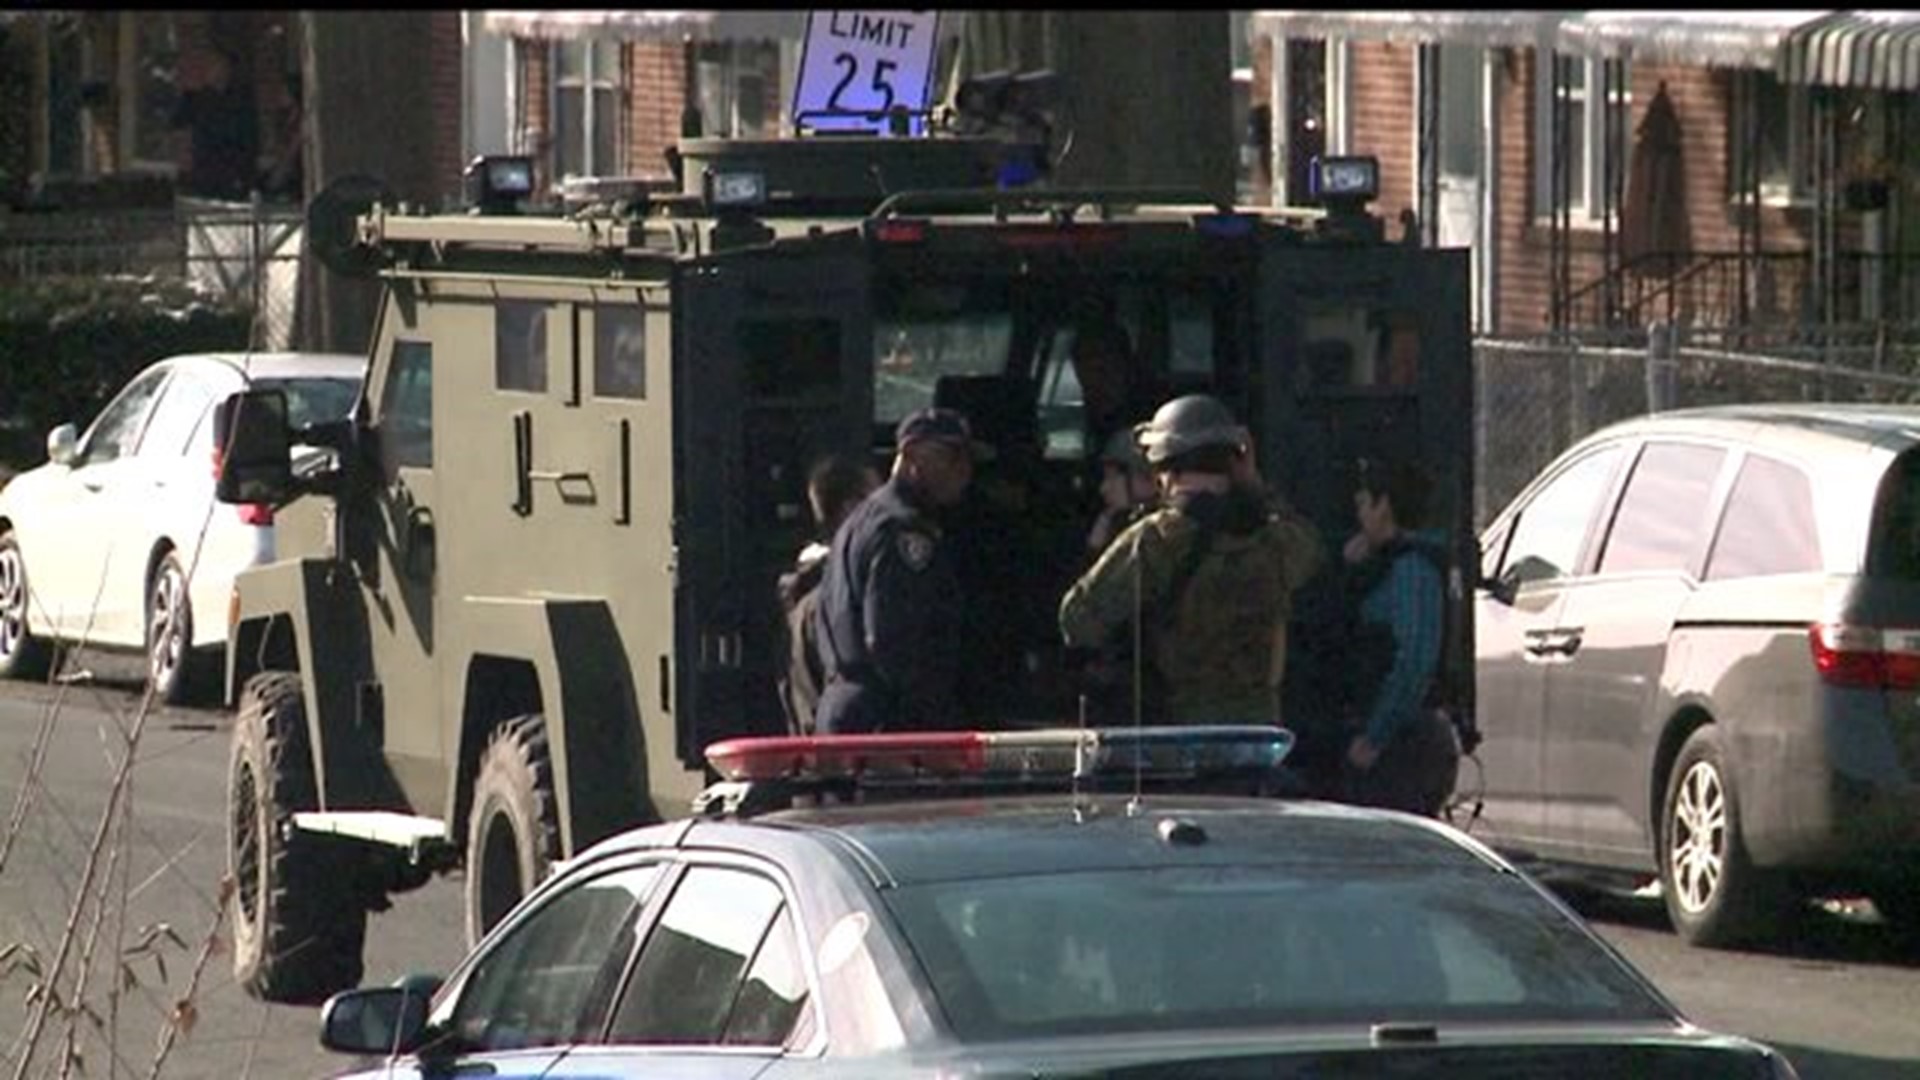 Attempted Homicide suspect dead after barricading himself inside Harrisburg home